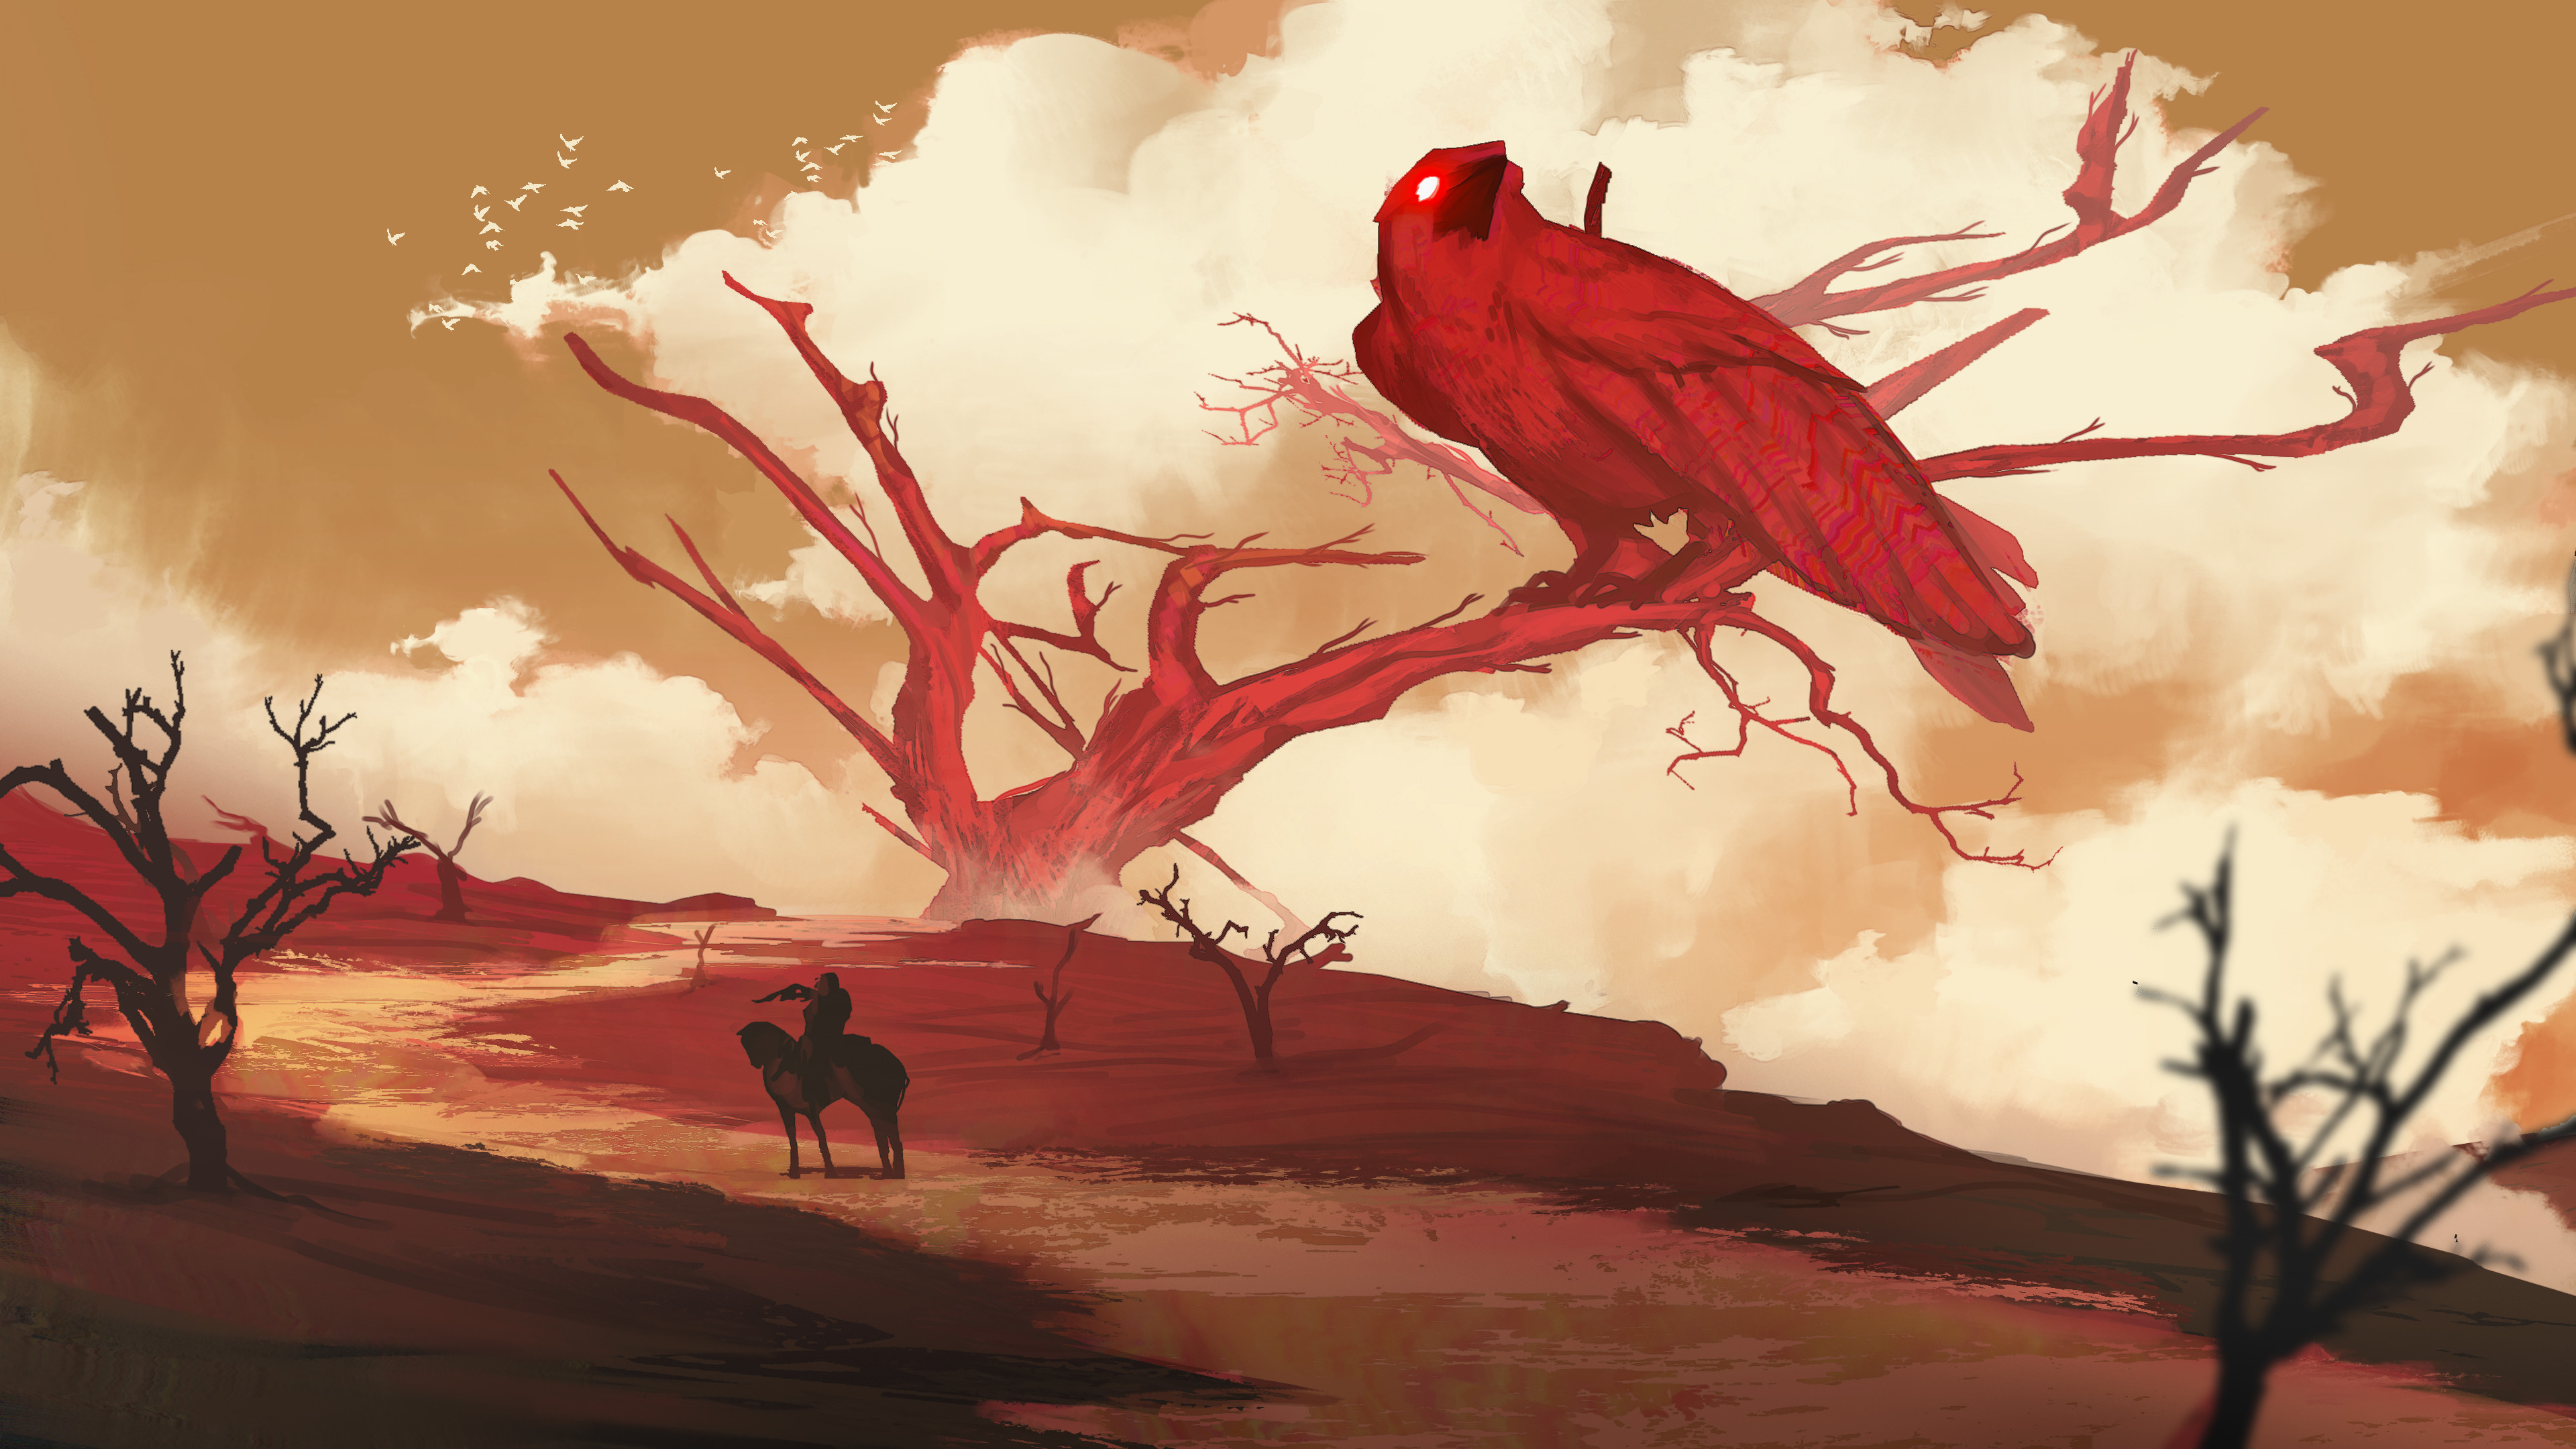 Digital Art Egor Poskryakov Fantasy Art Desert Horse Birds Crow Red Clouds Trees Dead Trees 3840x2160